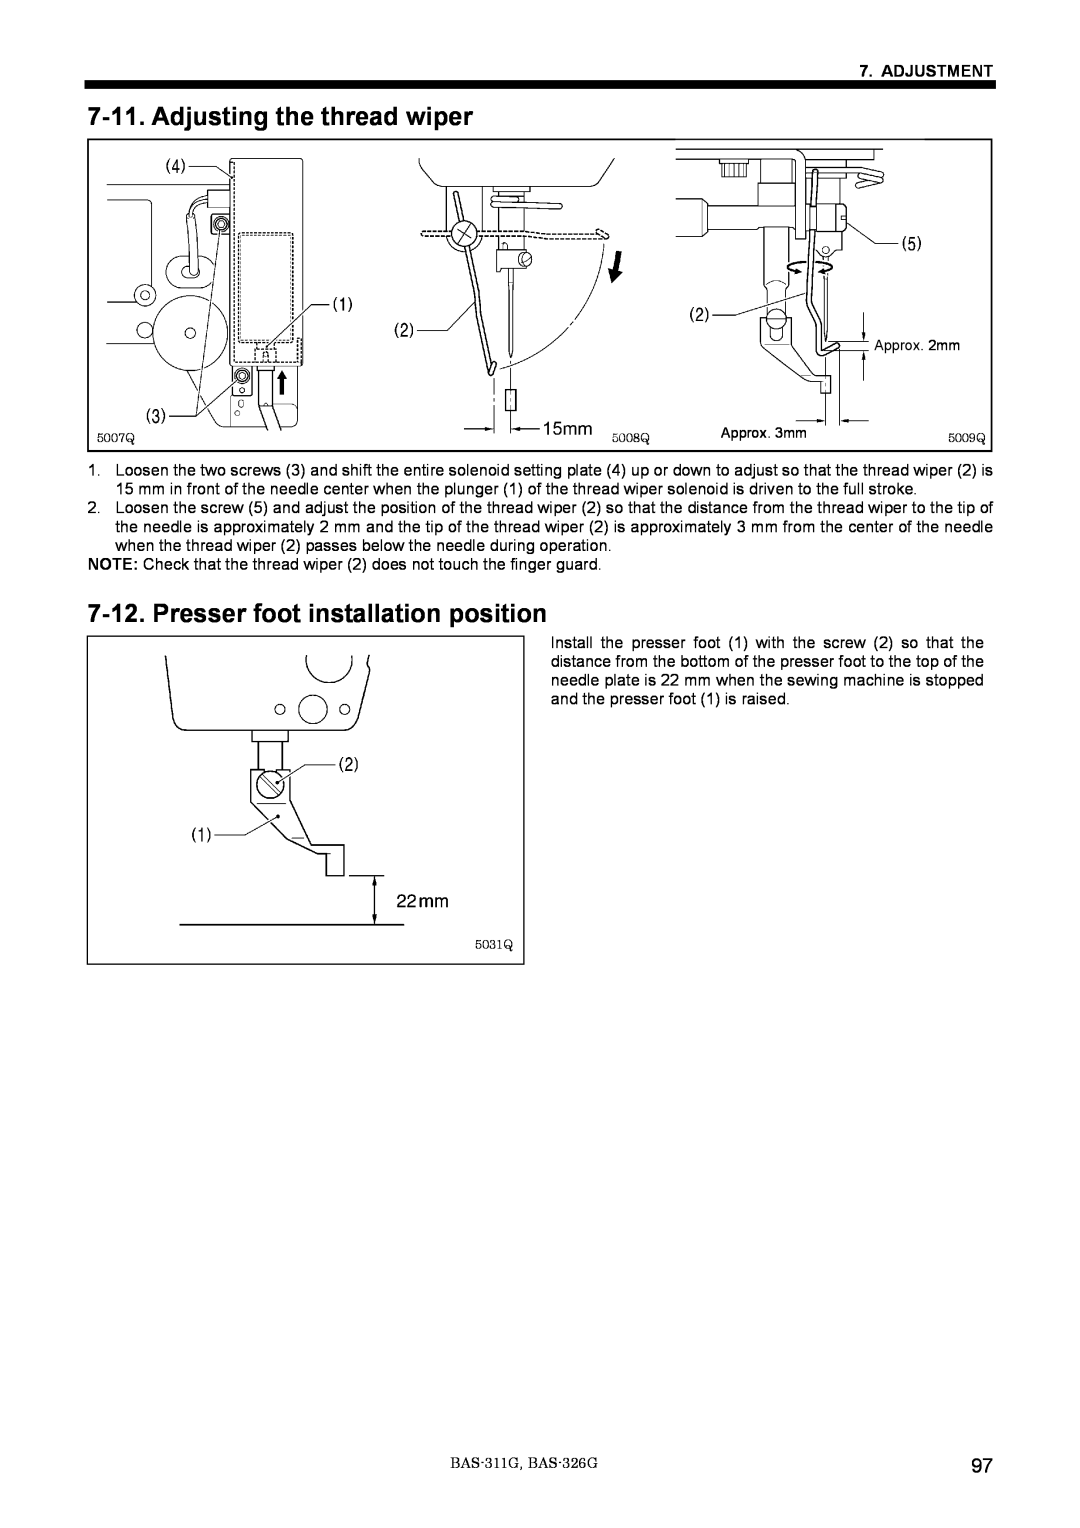 Brother BAS-311G service manual Adjusting the thread wiper, Presser foot installation position, Adjustment 